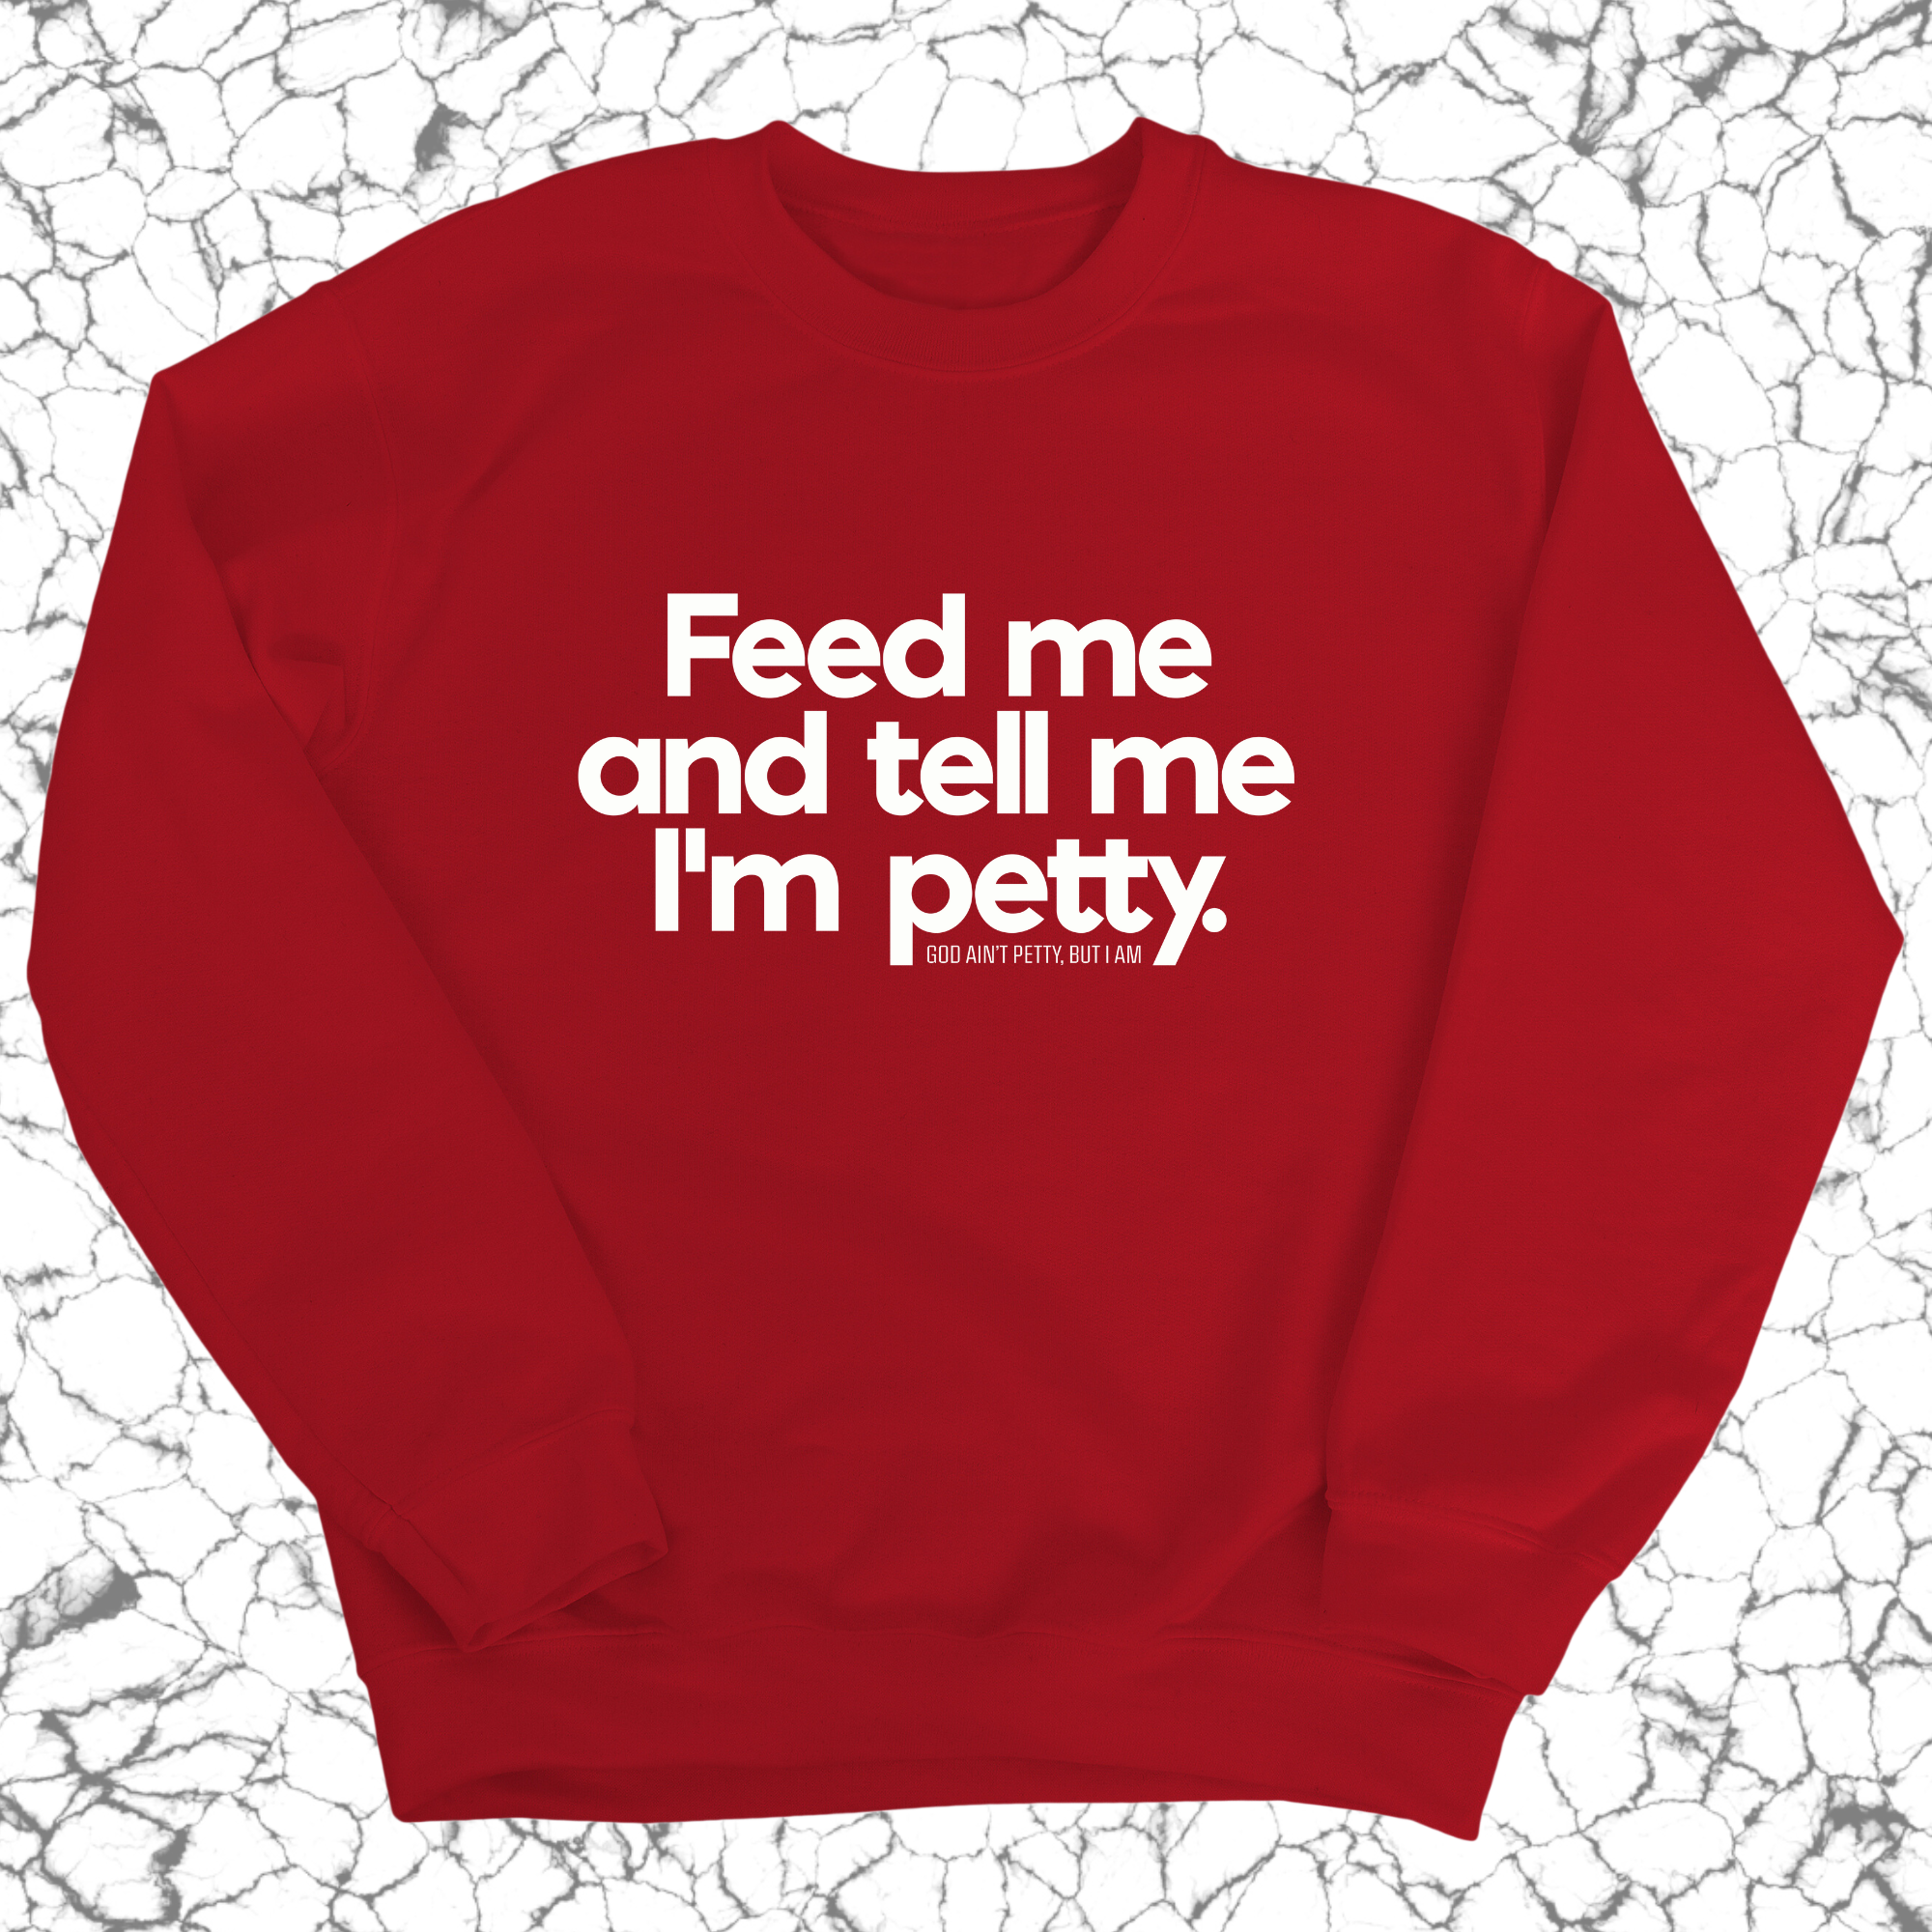 Feed me and tell me I'm petty Unisex Sweatshirt-Sweatshirt-The Original God Ain't Petty But I Am